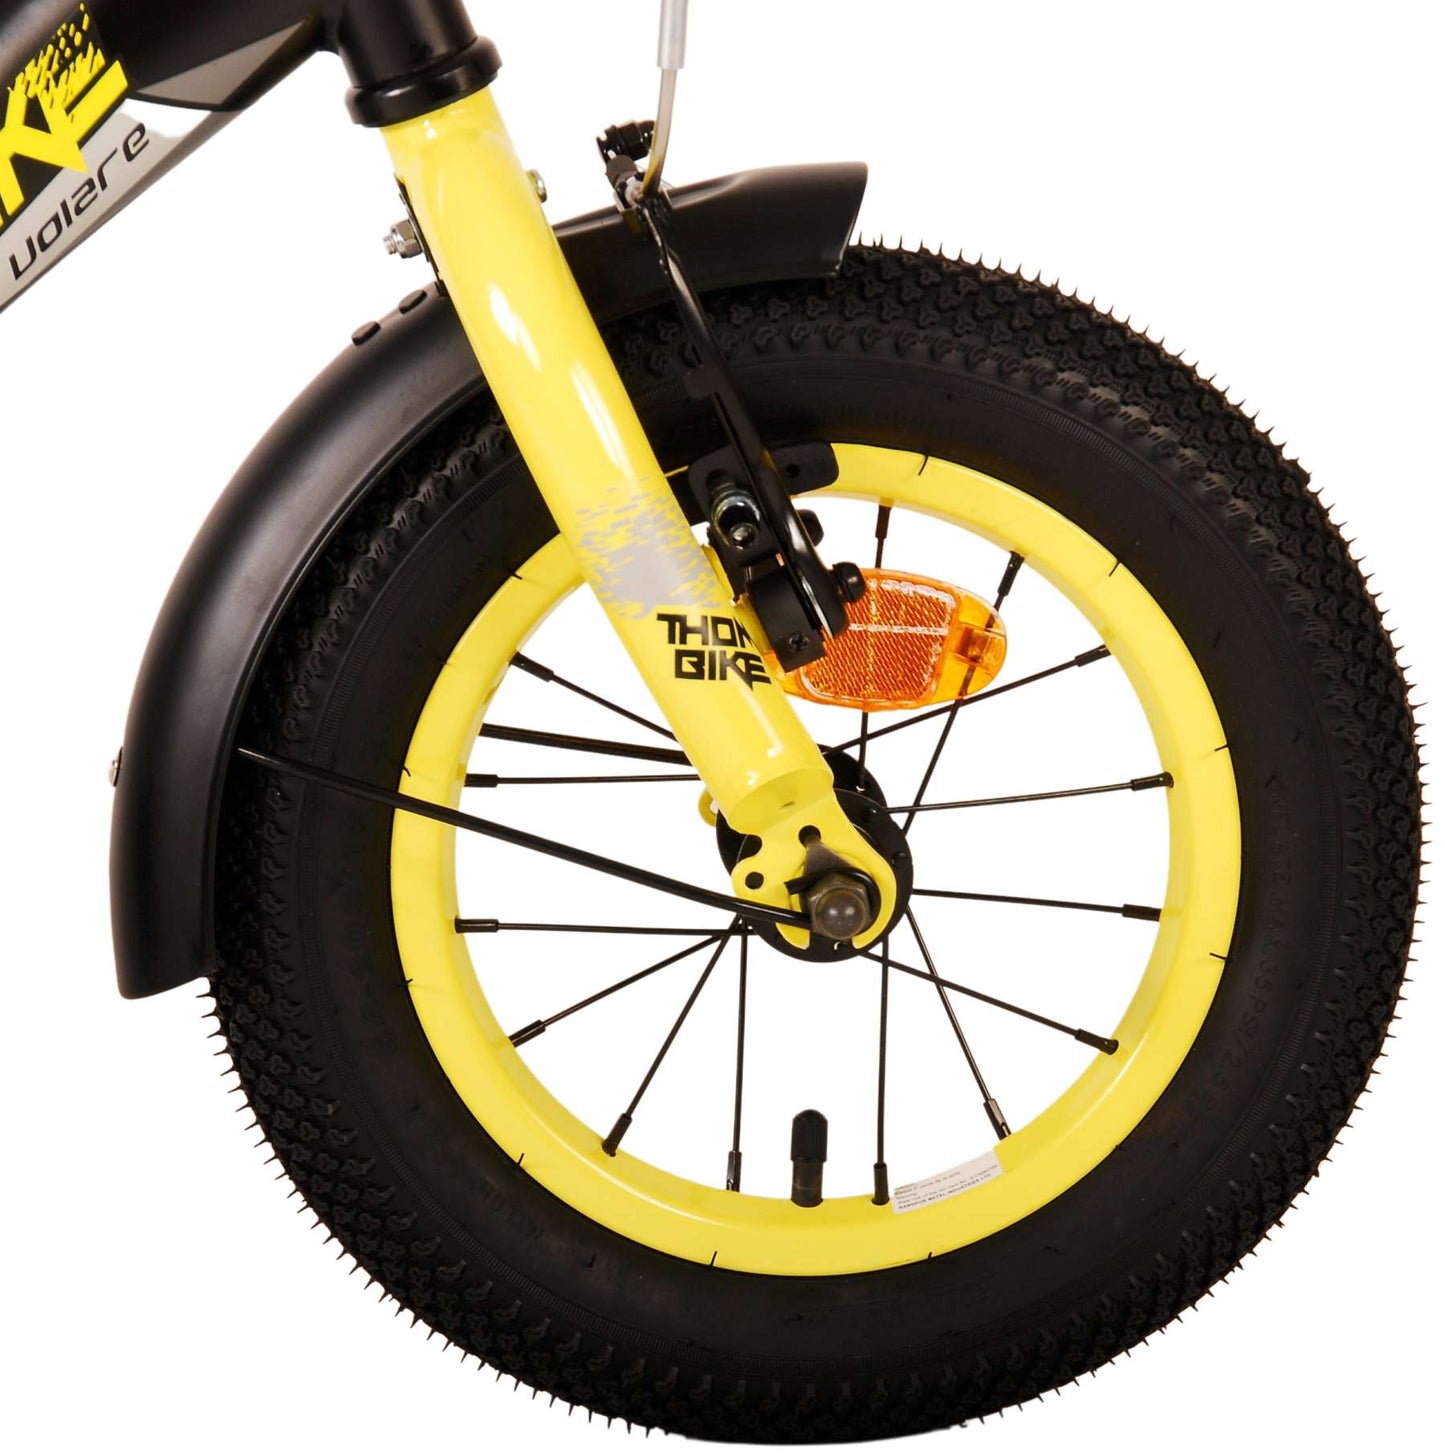 Volare Thombike Bike para niños - Niños - 12 pulgadas - Amarillo negro - Dos frenos de mano